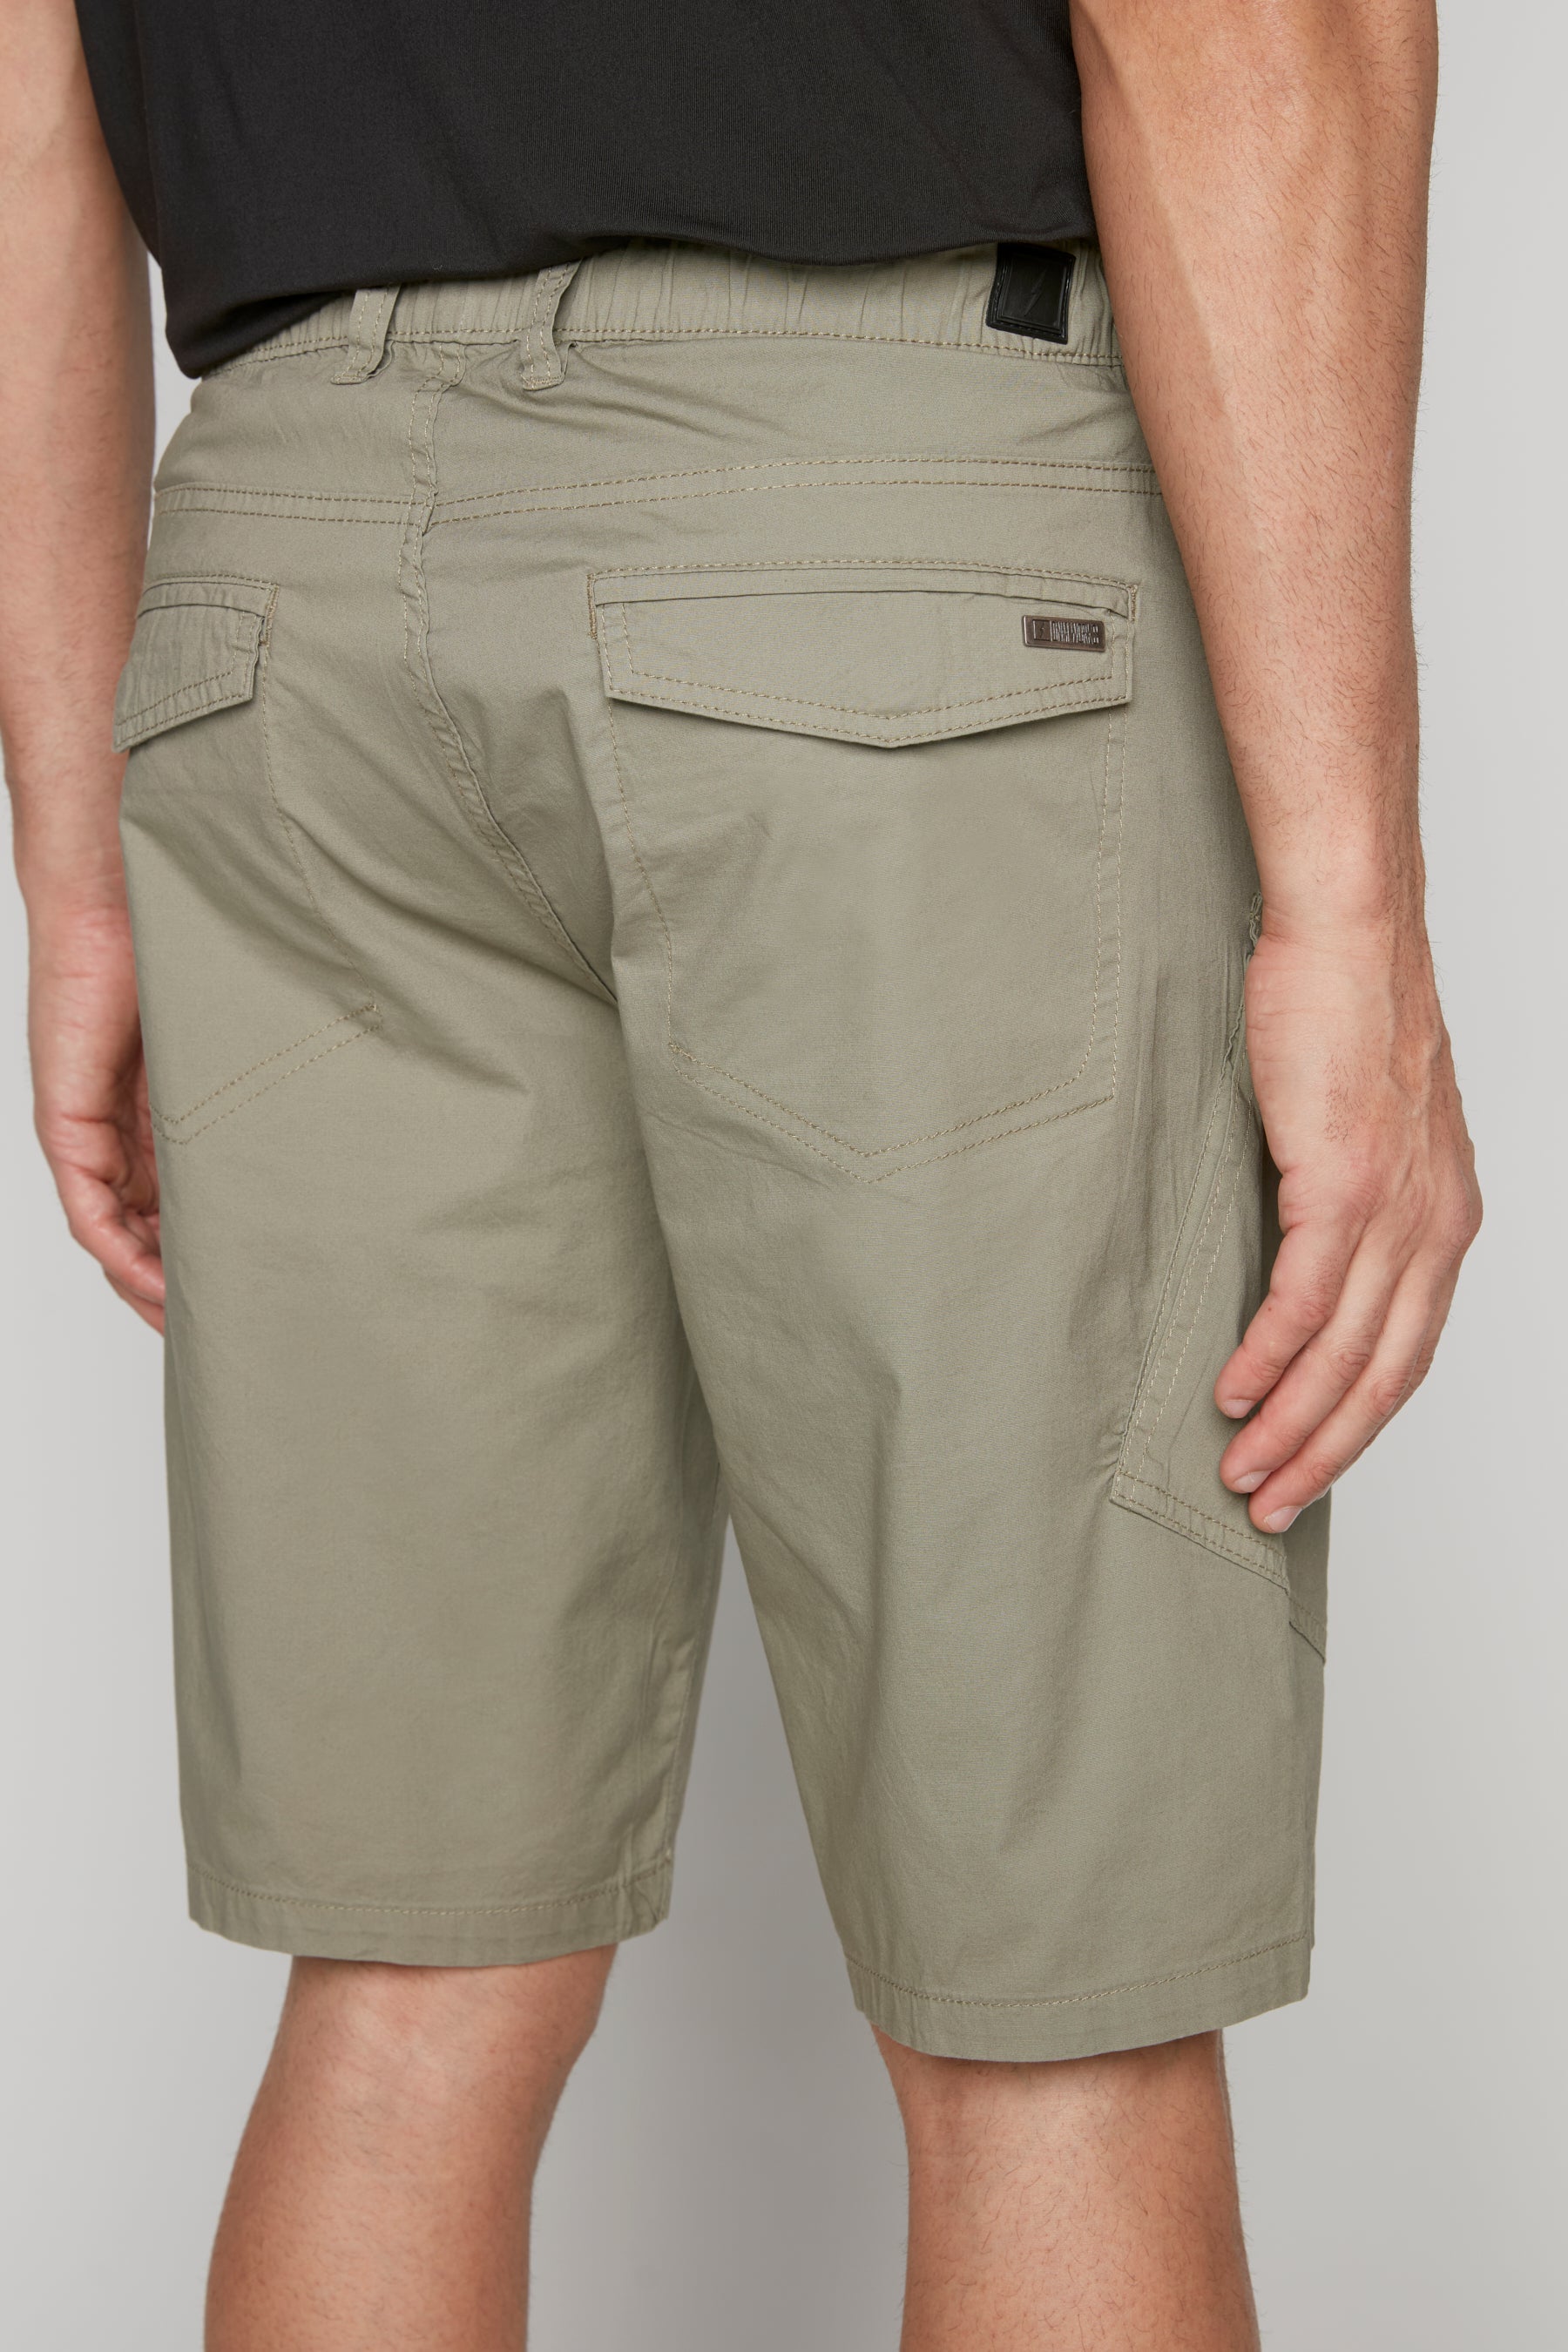 KRAVITZ - Mens 5-Pockets Pull-On Cargo Poplin Shorts - Light Olive DNM.WORKS